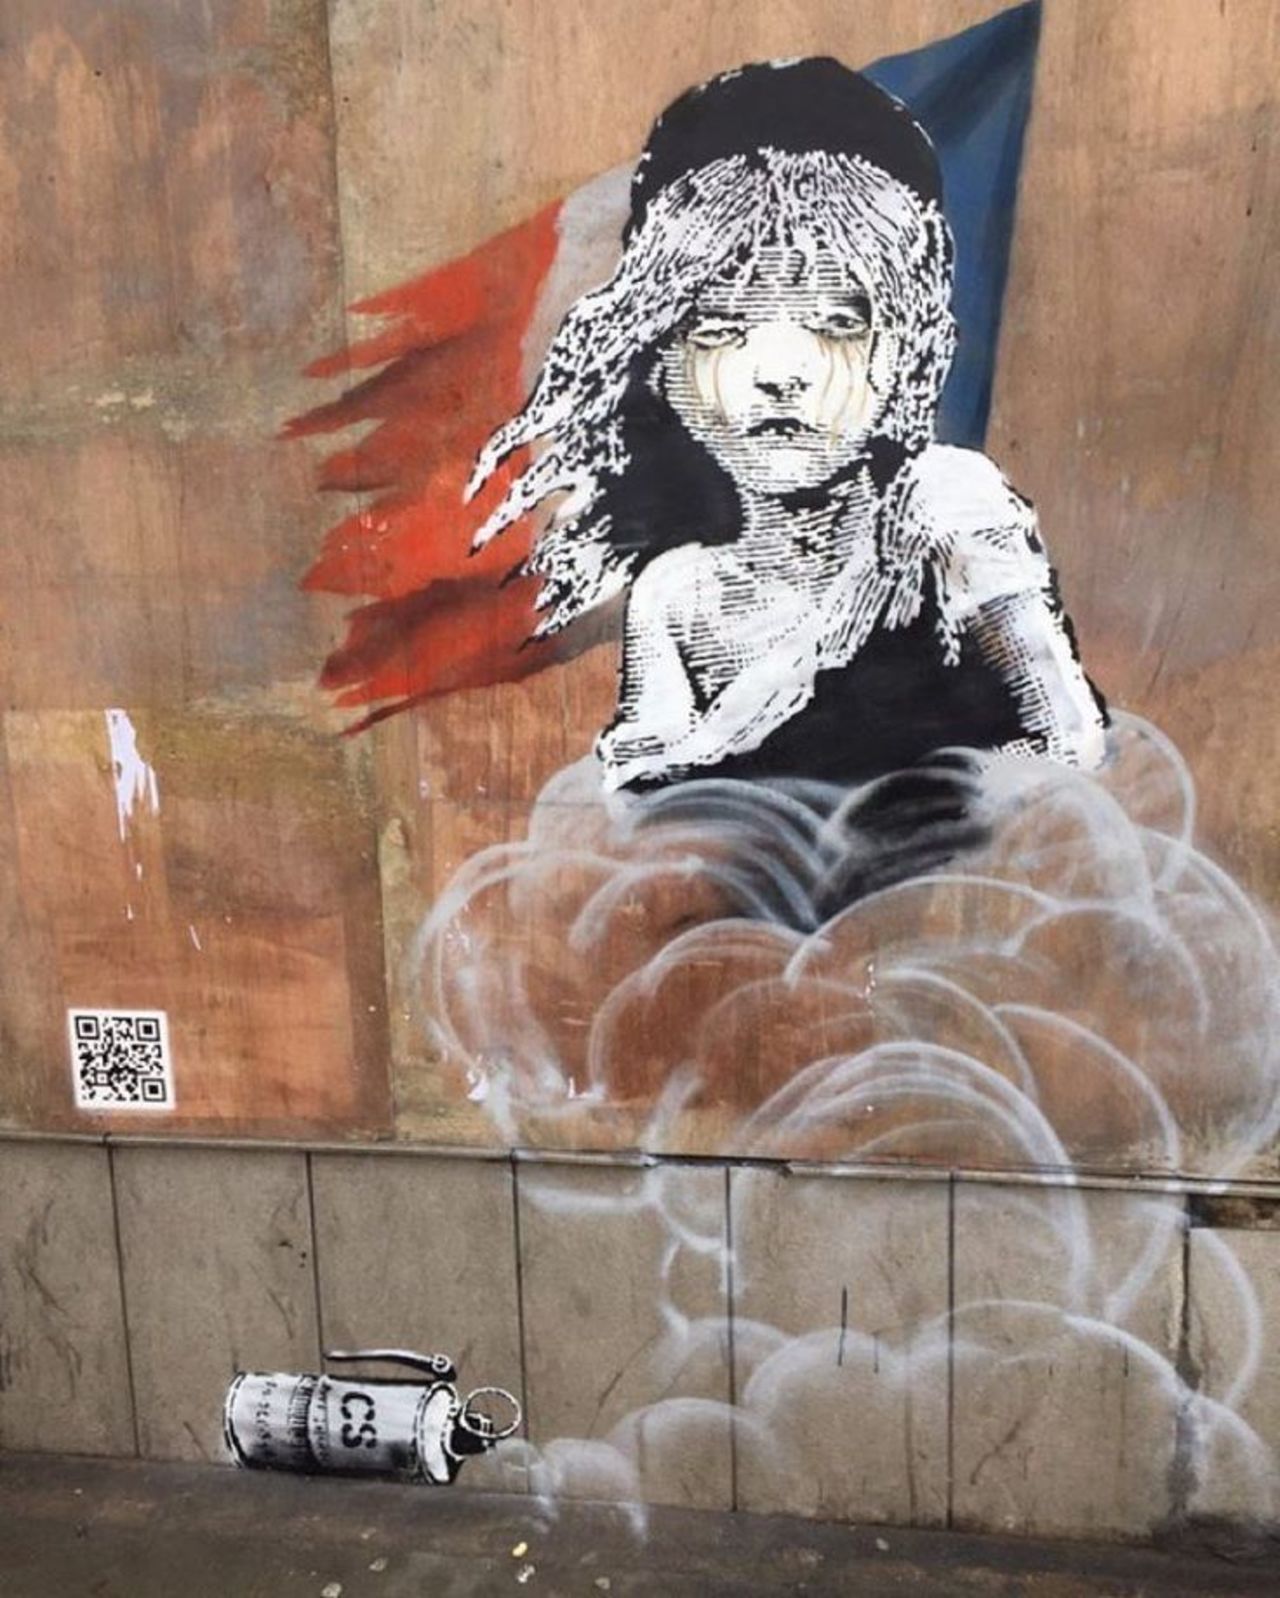 Banksy#streetart #mural #art #graffiti https://t.co/ioknB0Vucu